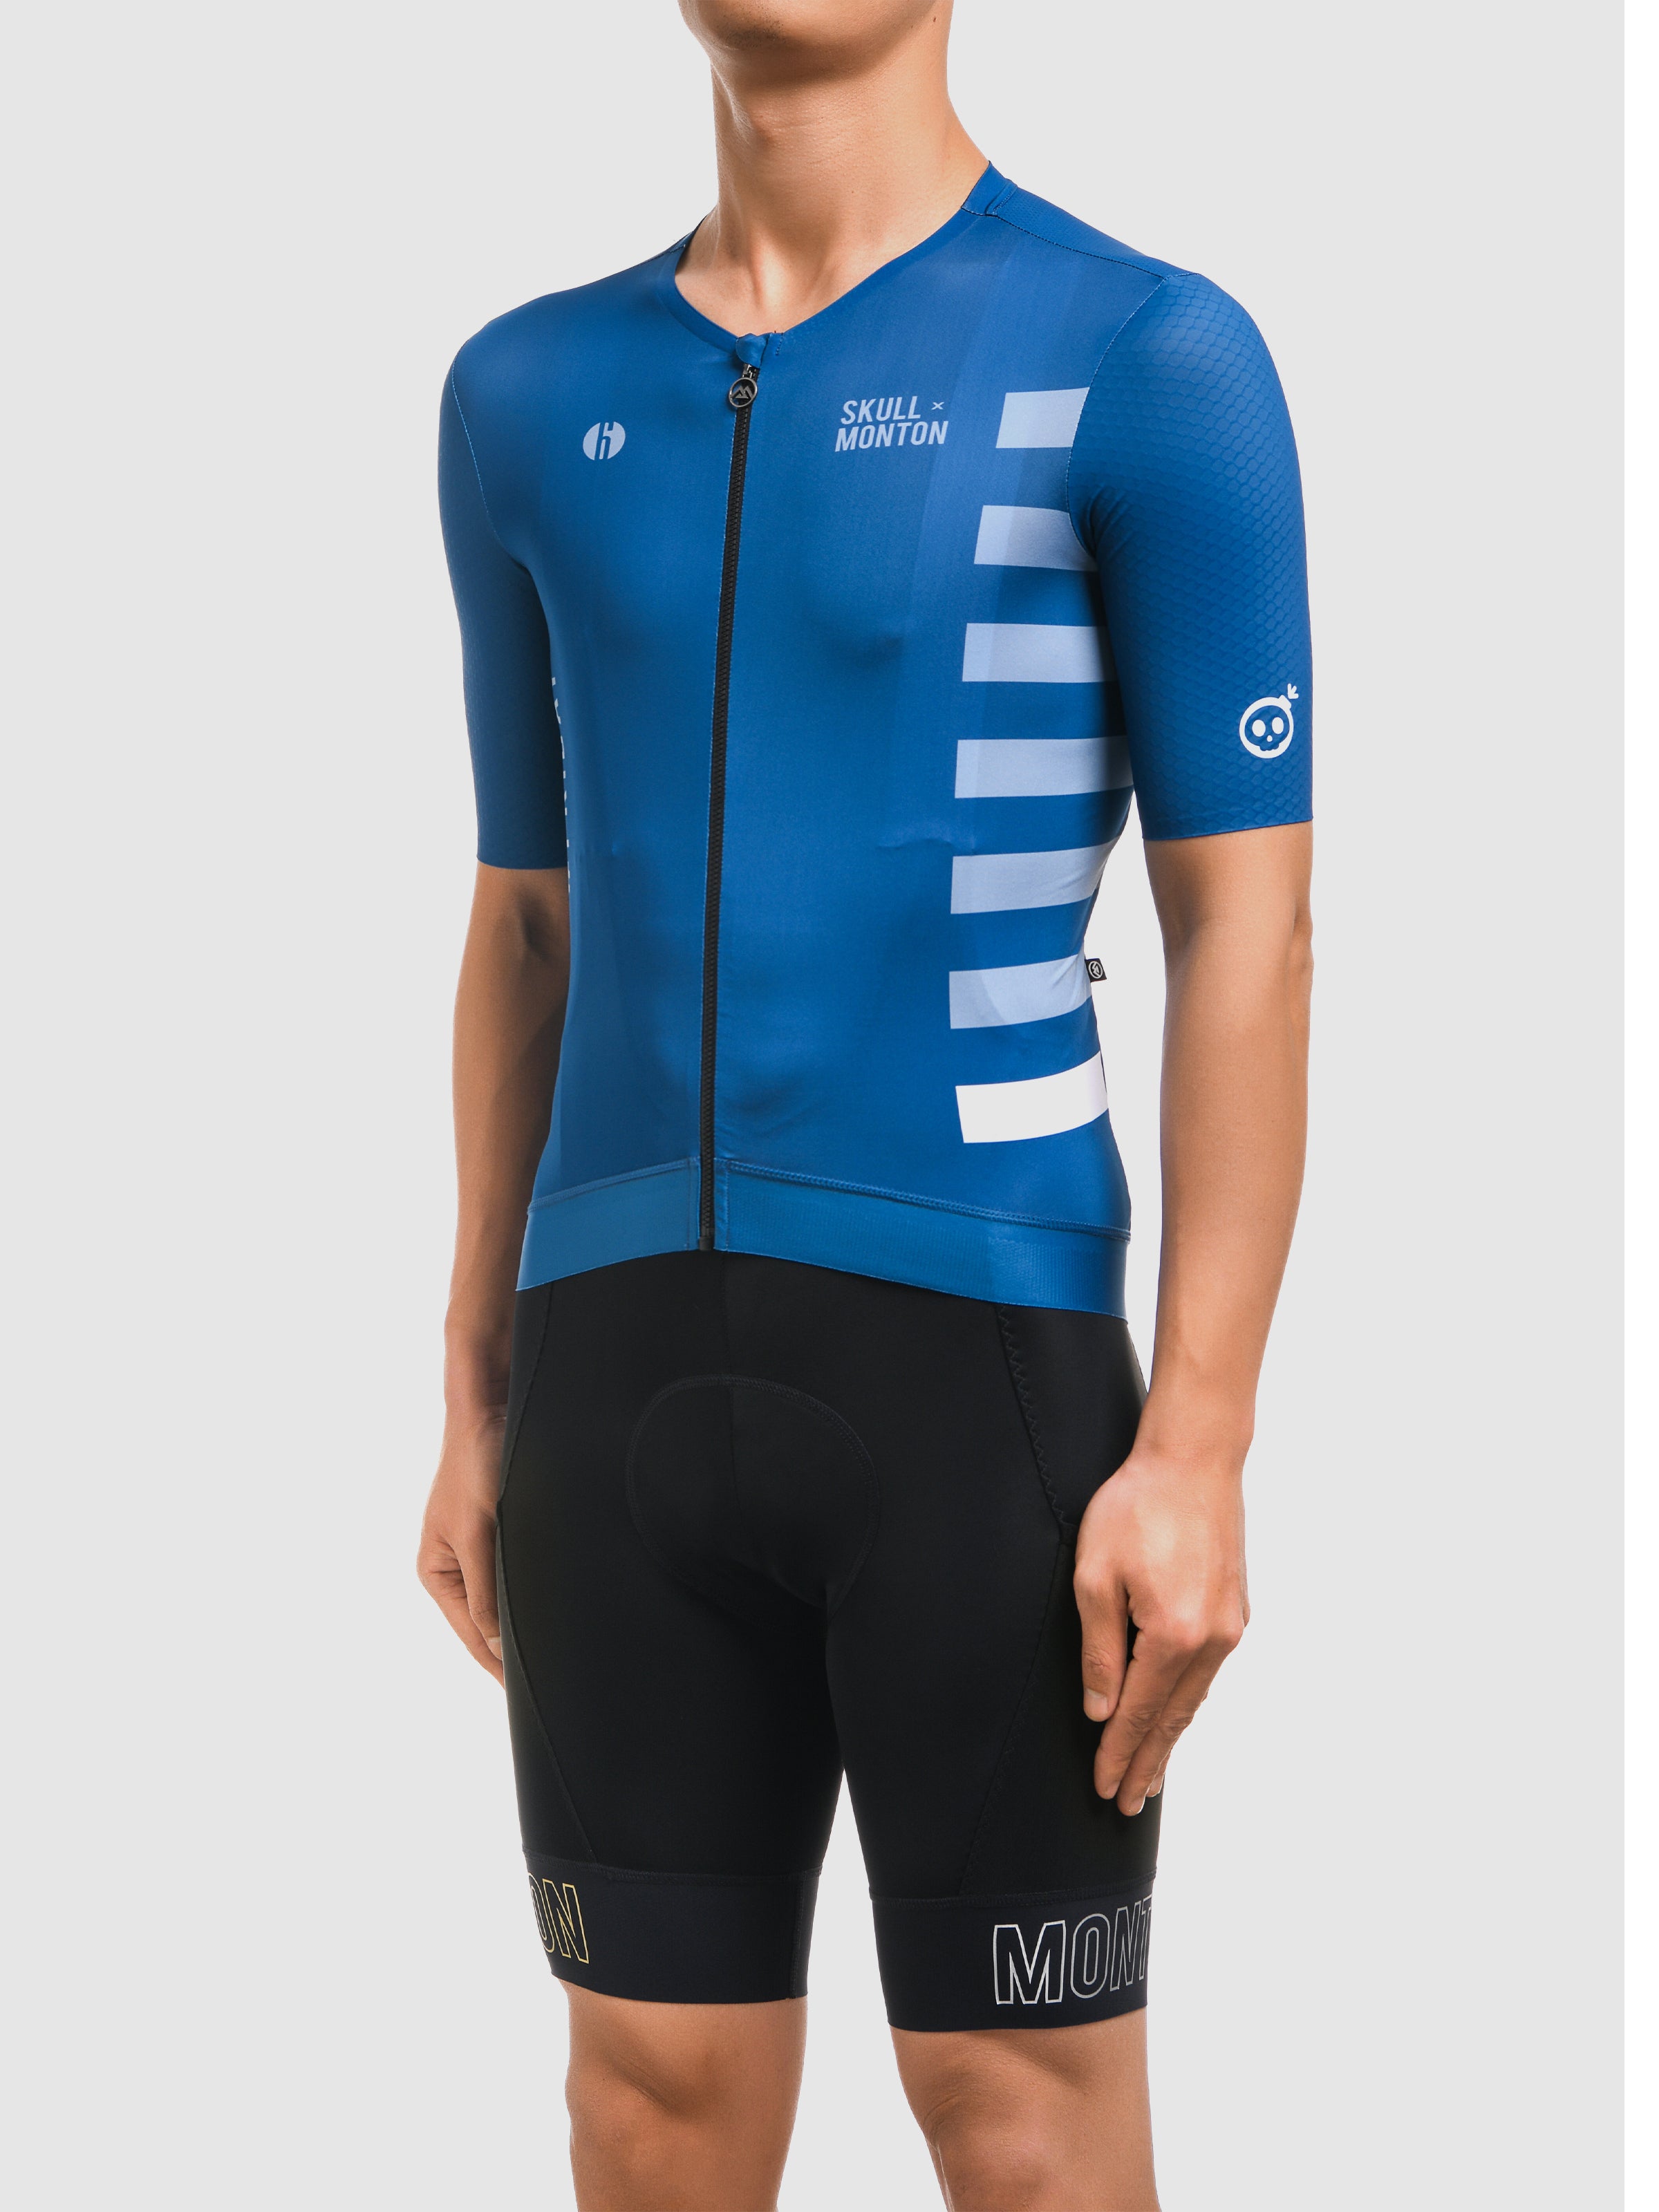 blue cycling jersey